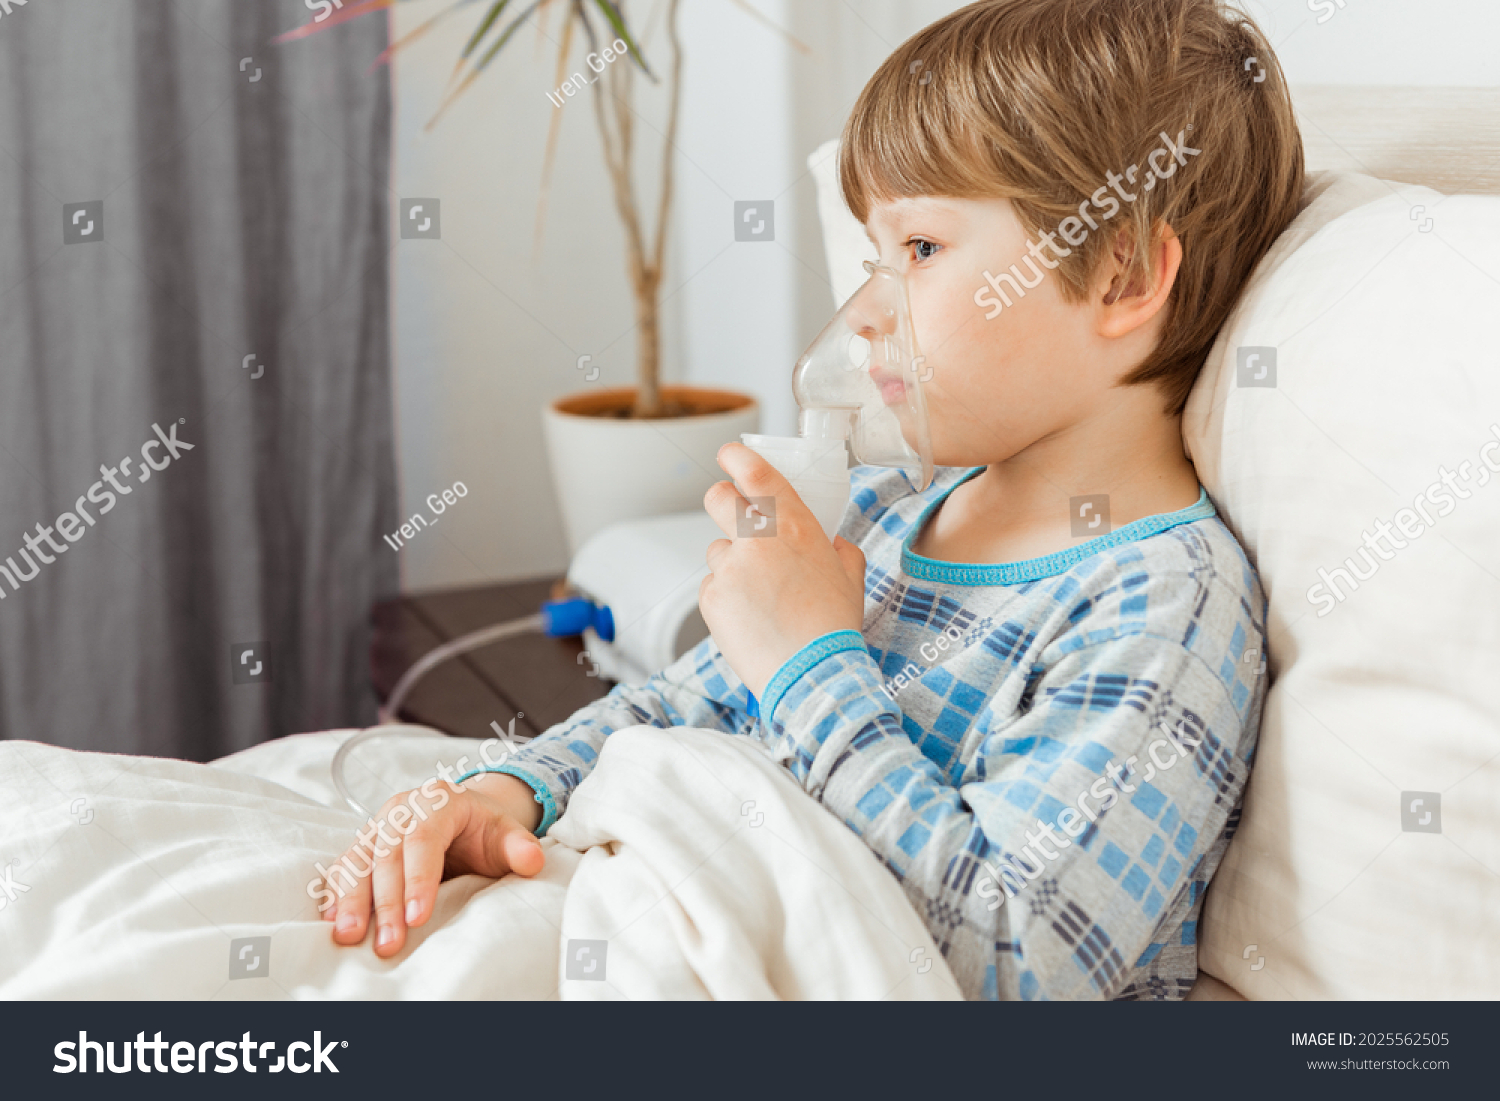 Boy with a respiratory syncytial virus, inhaling medication through an inhalation mask. Flu, coronavirus concept #2025562505